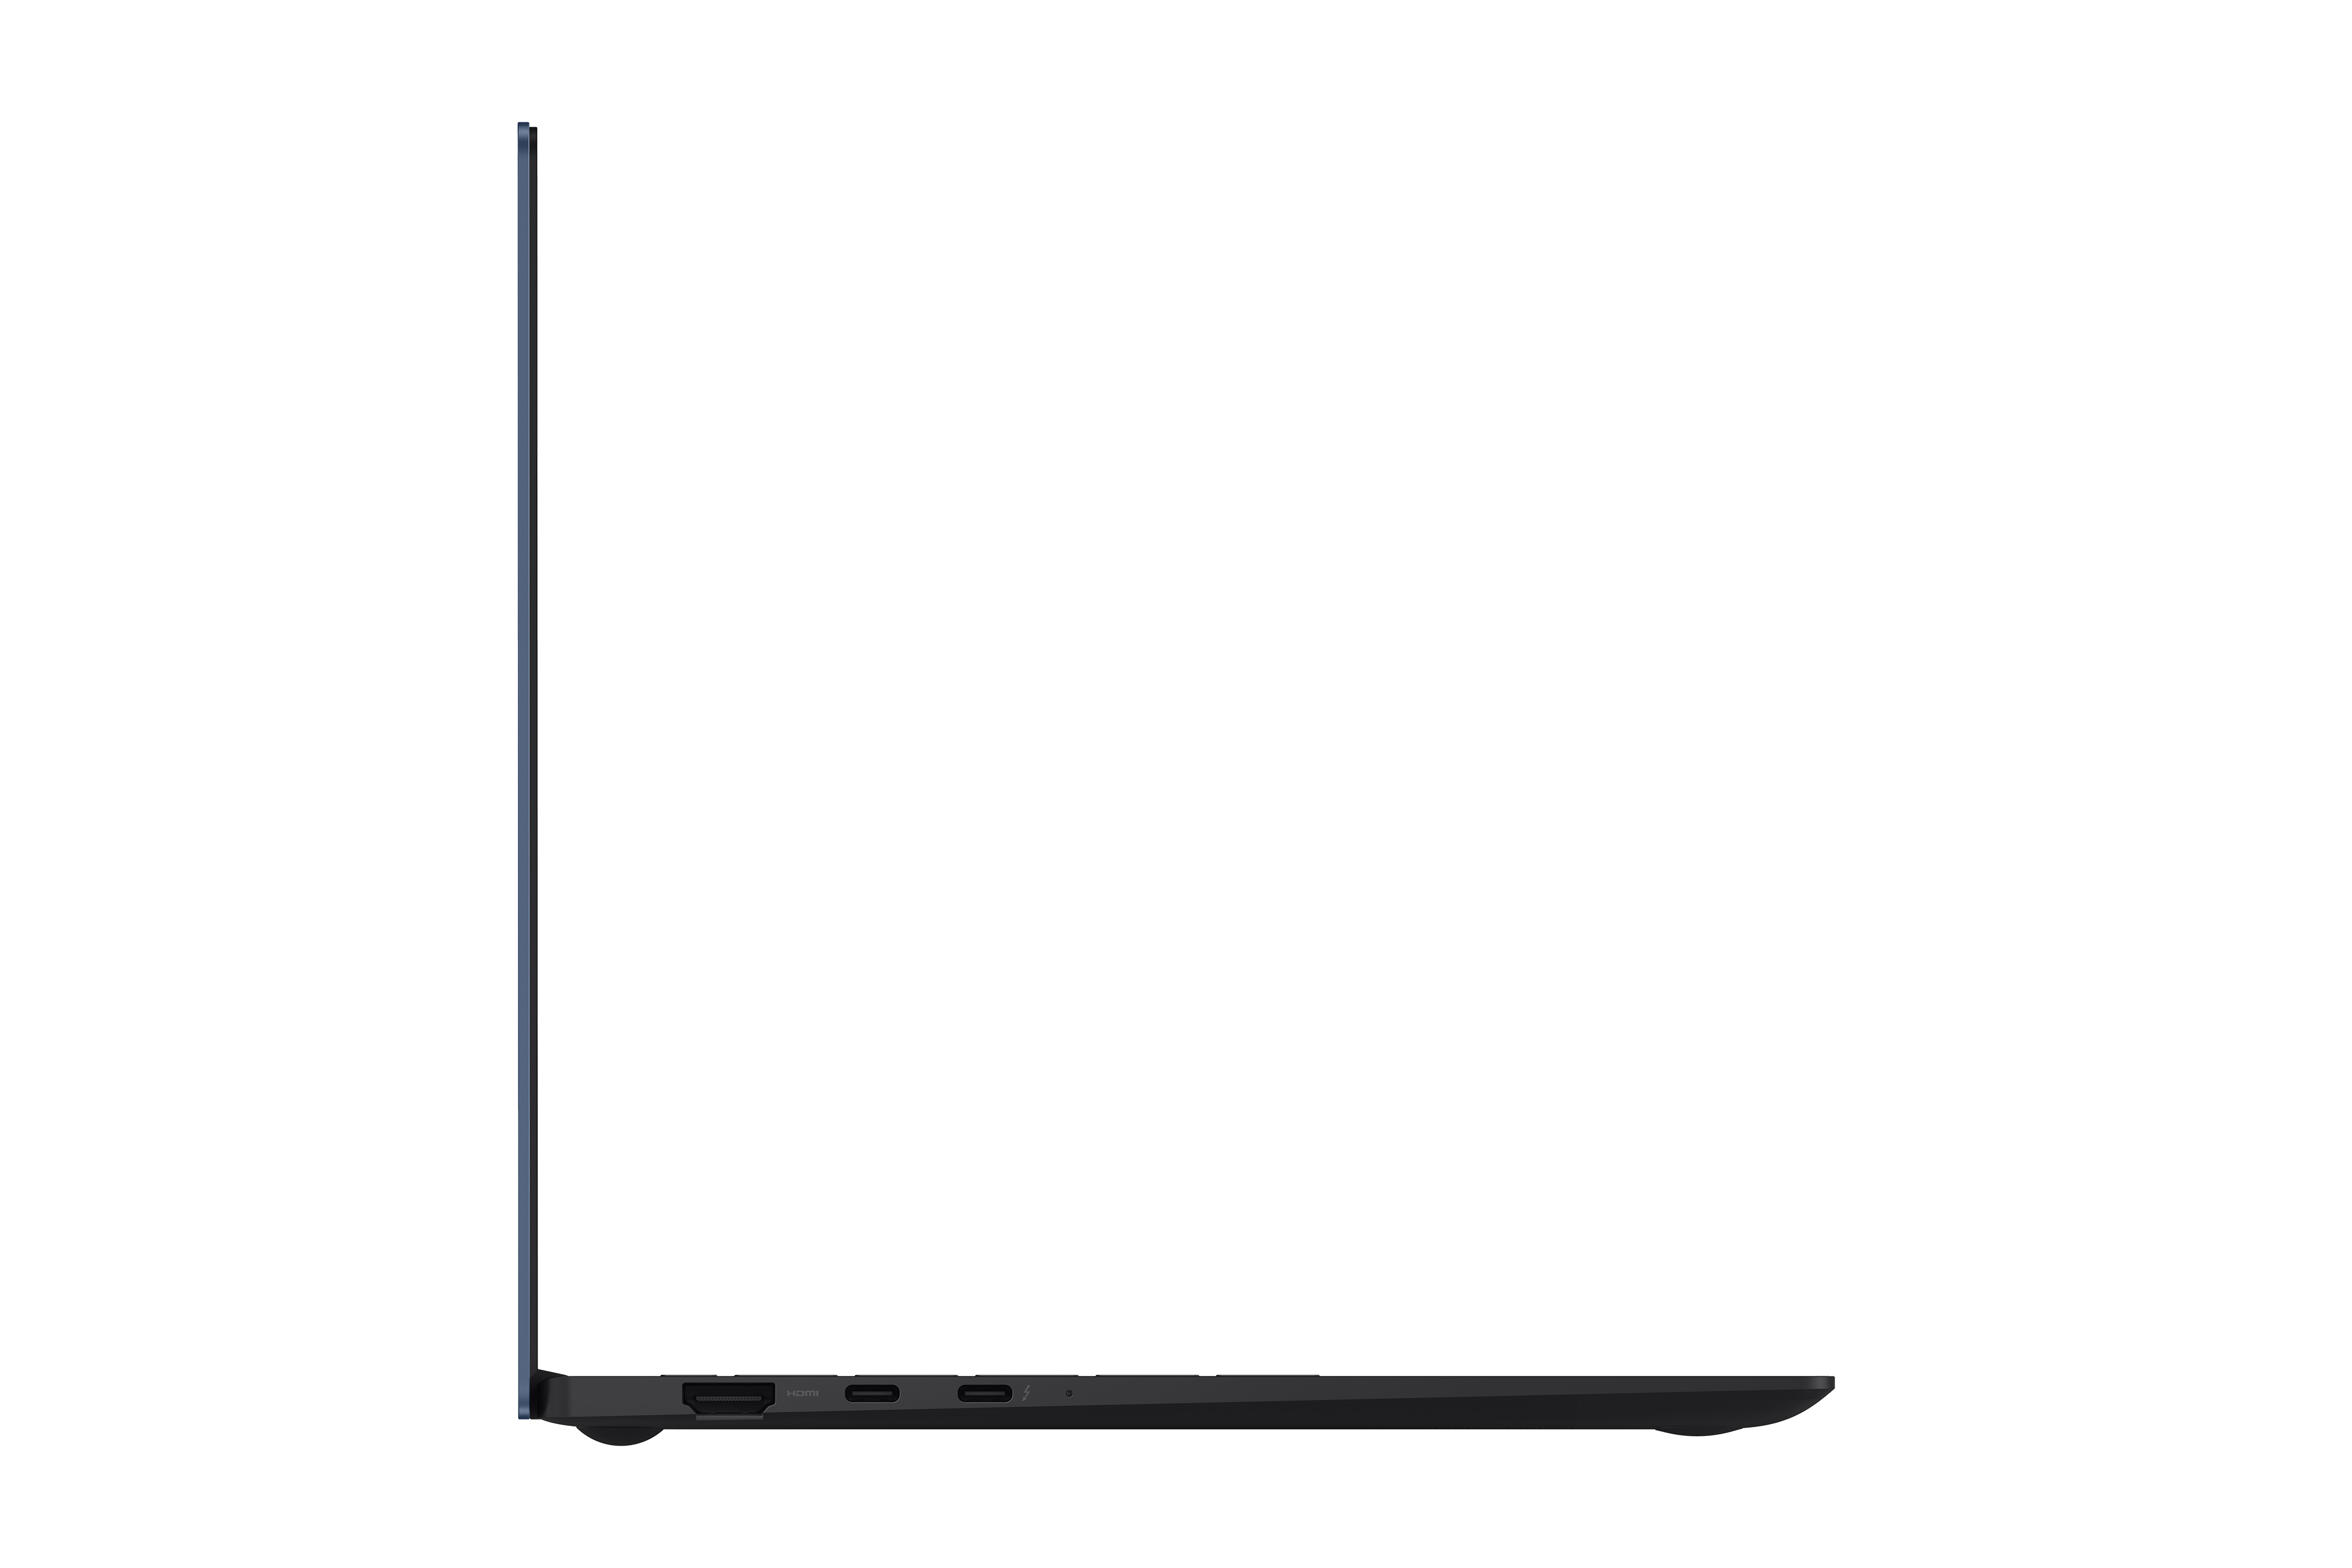 SAMSUNG Galaxy Book Pro 13.3" Laptop - Intel Core i5 - 8GB Memory - 256GB SSD - Mystic Navy - image 5 of 21